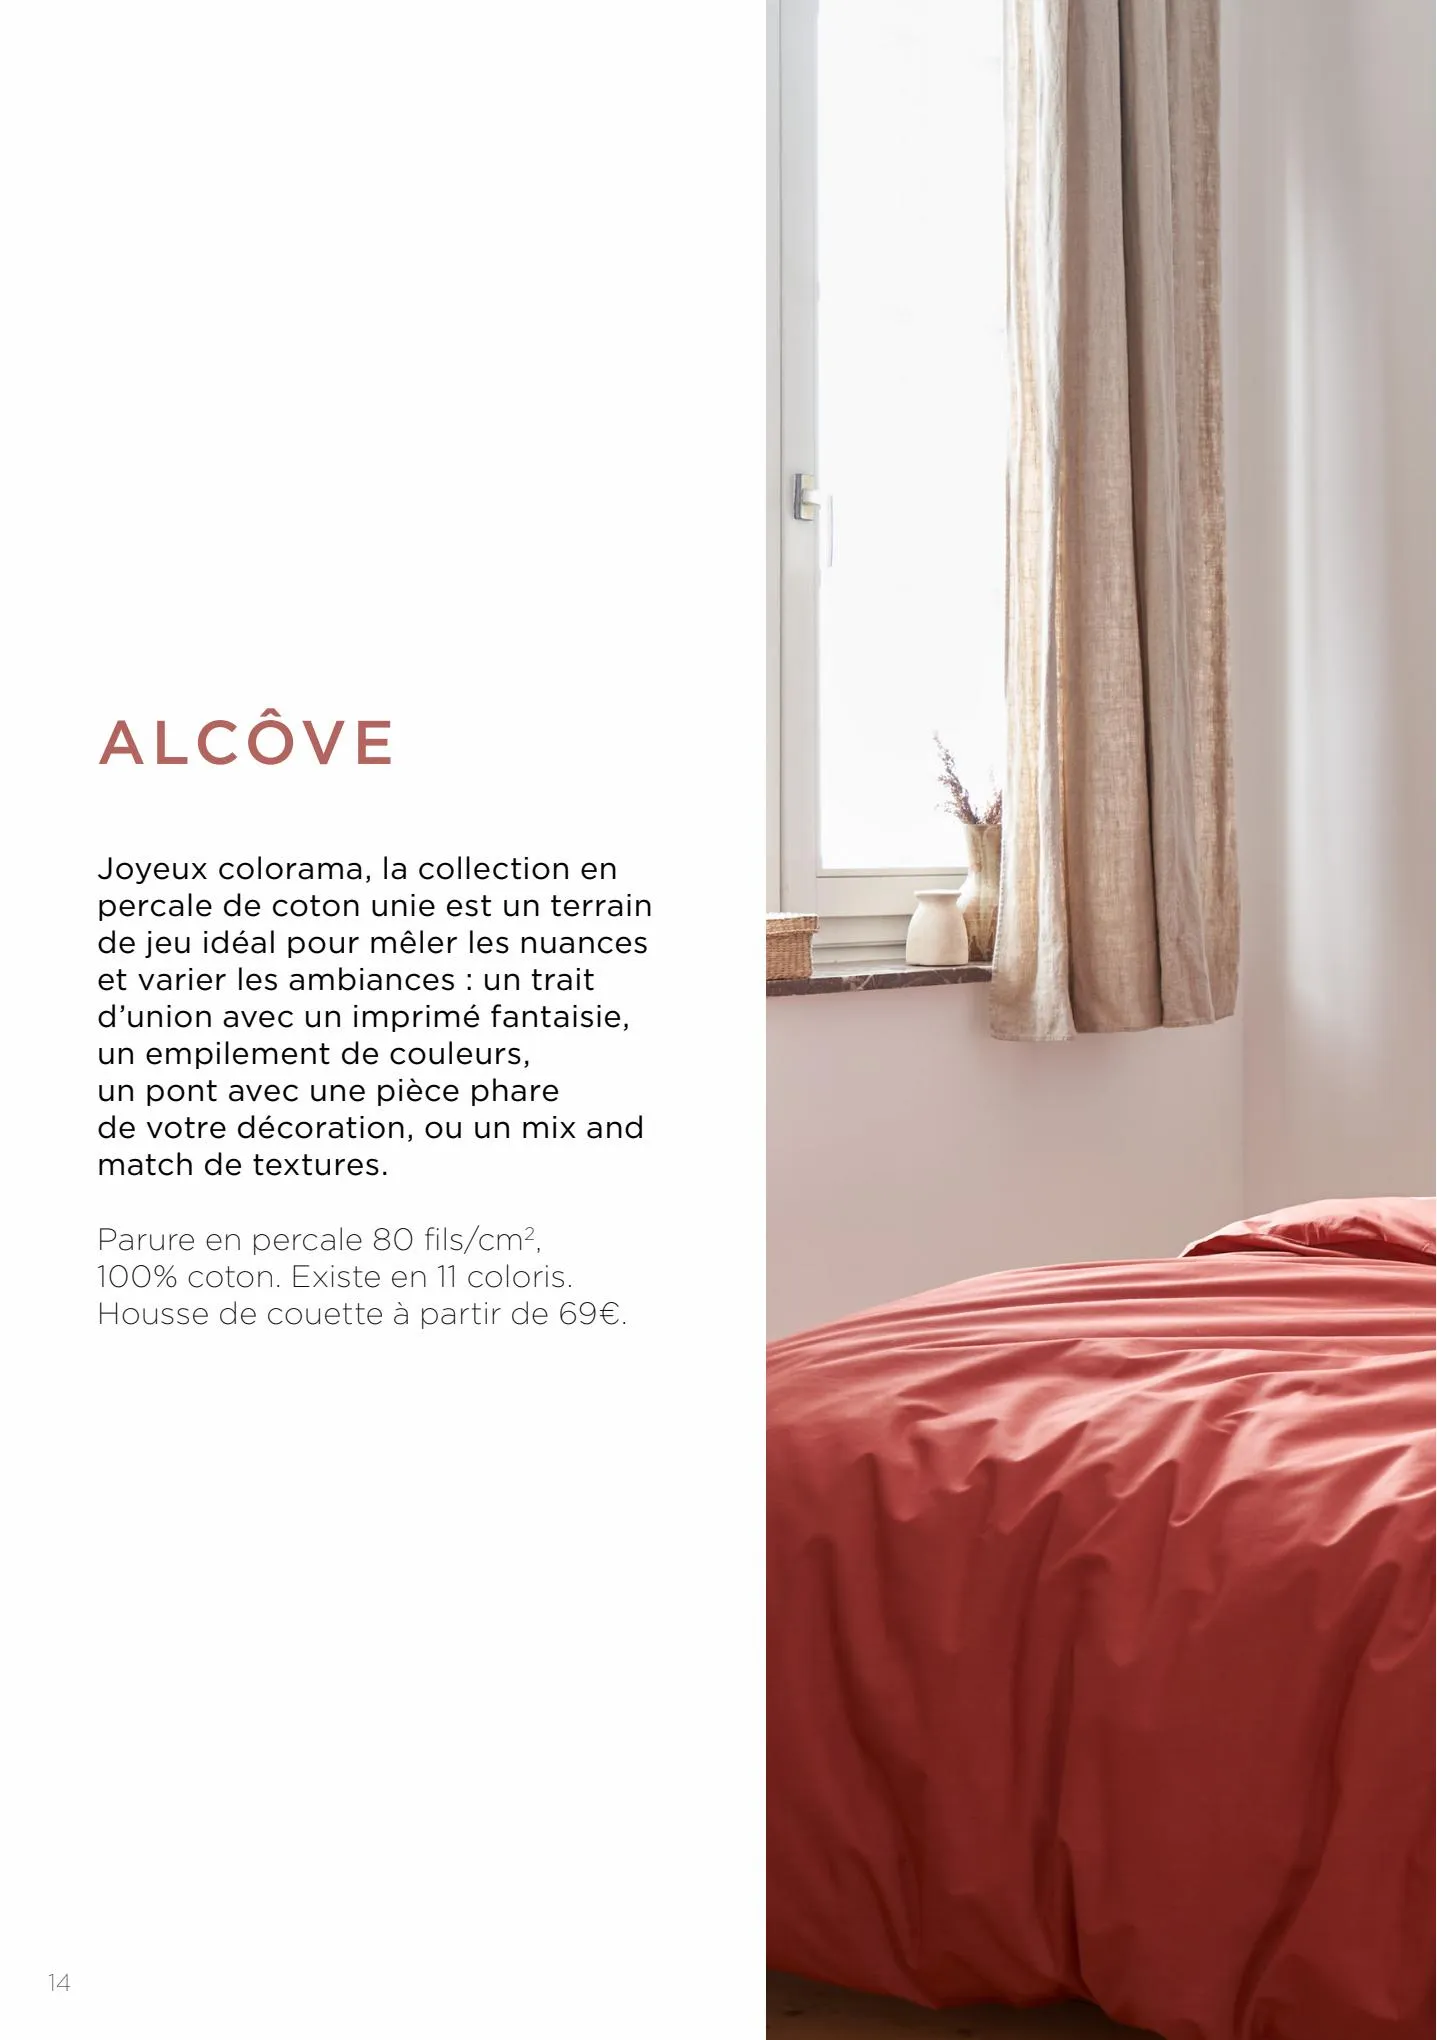 Catalogue Catalogue Olivier Desforges, page 00014